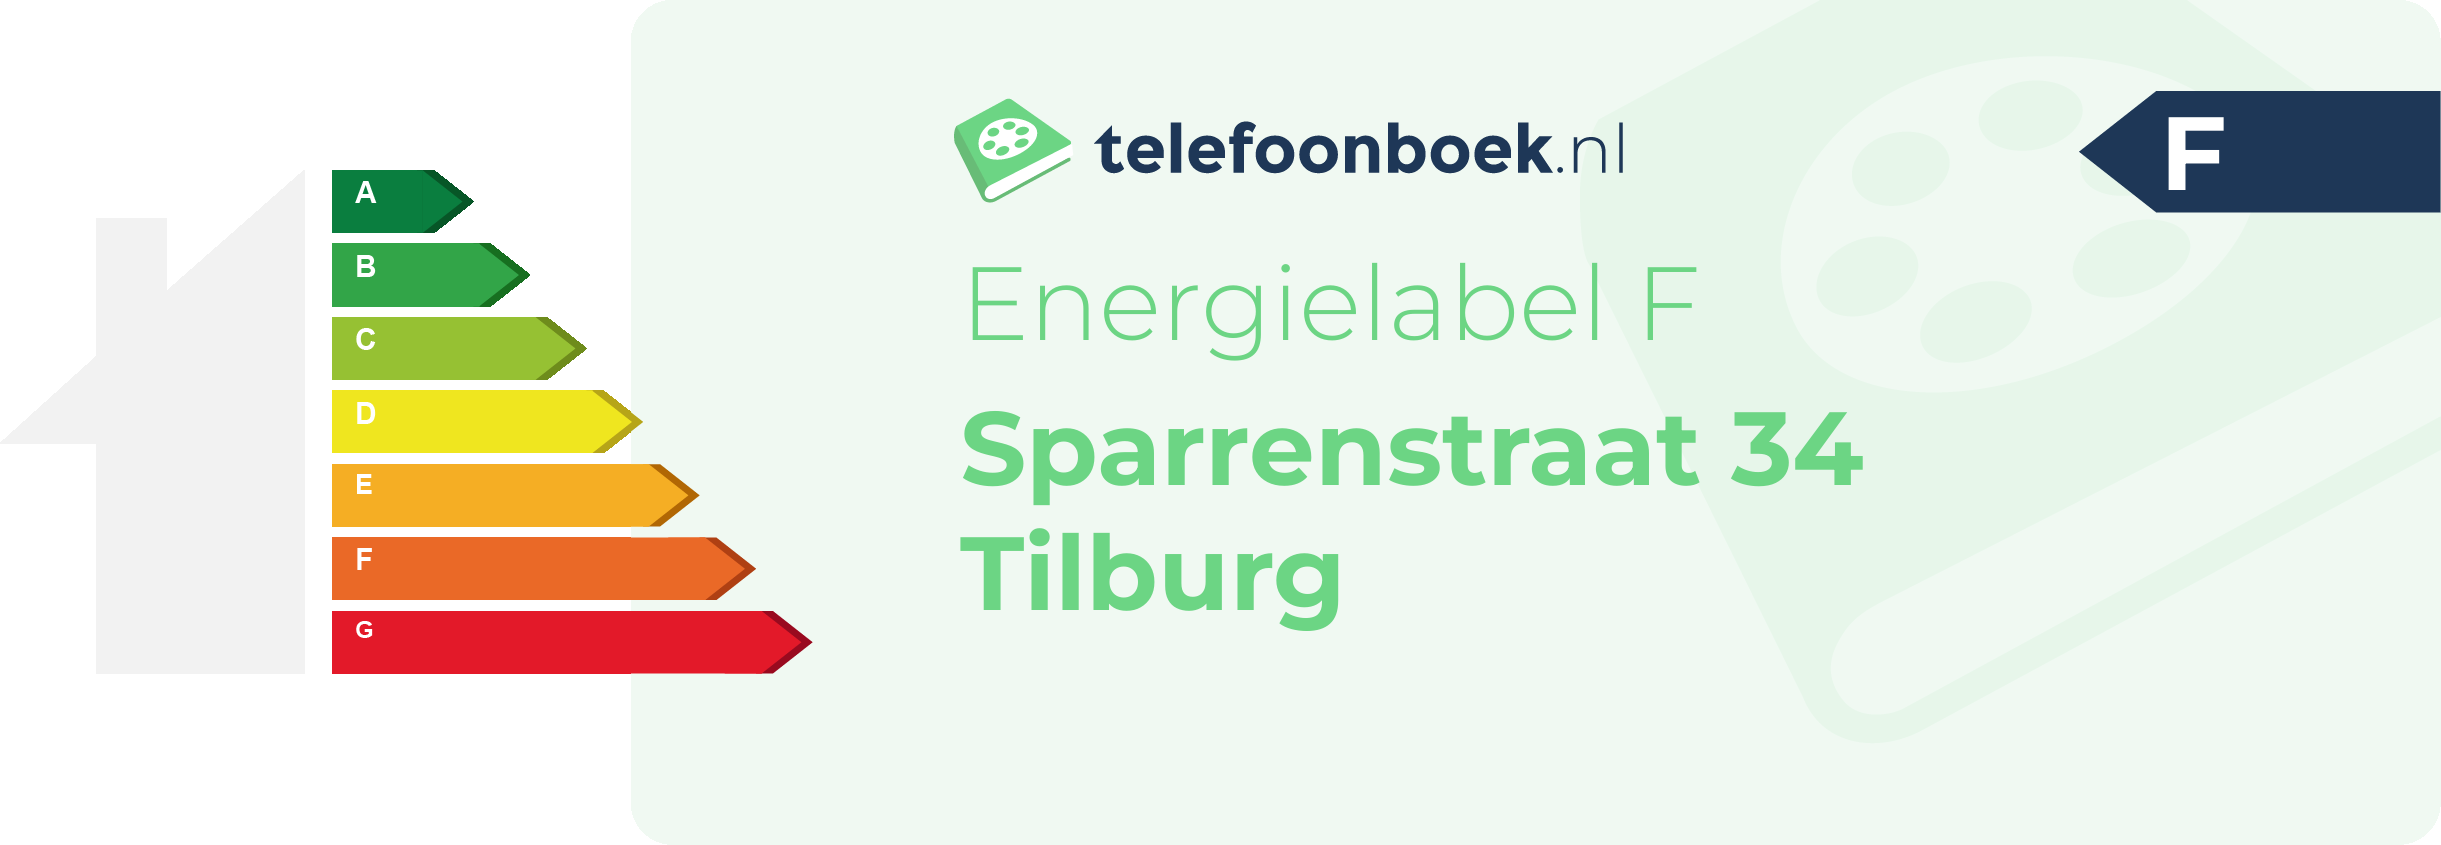 Energielabel Sparrenstraat 34 Tilburg